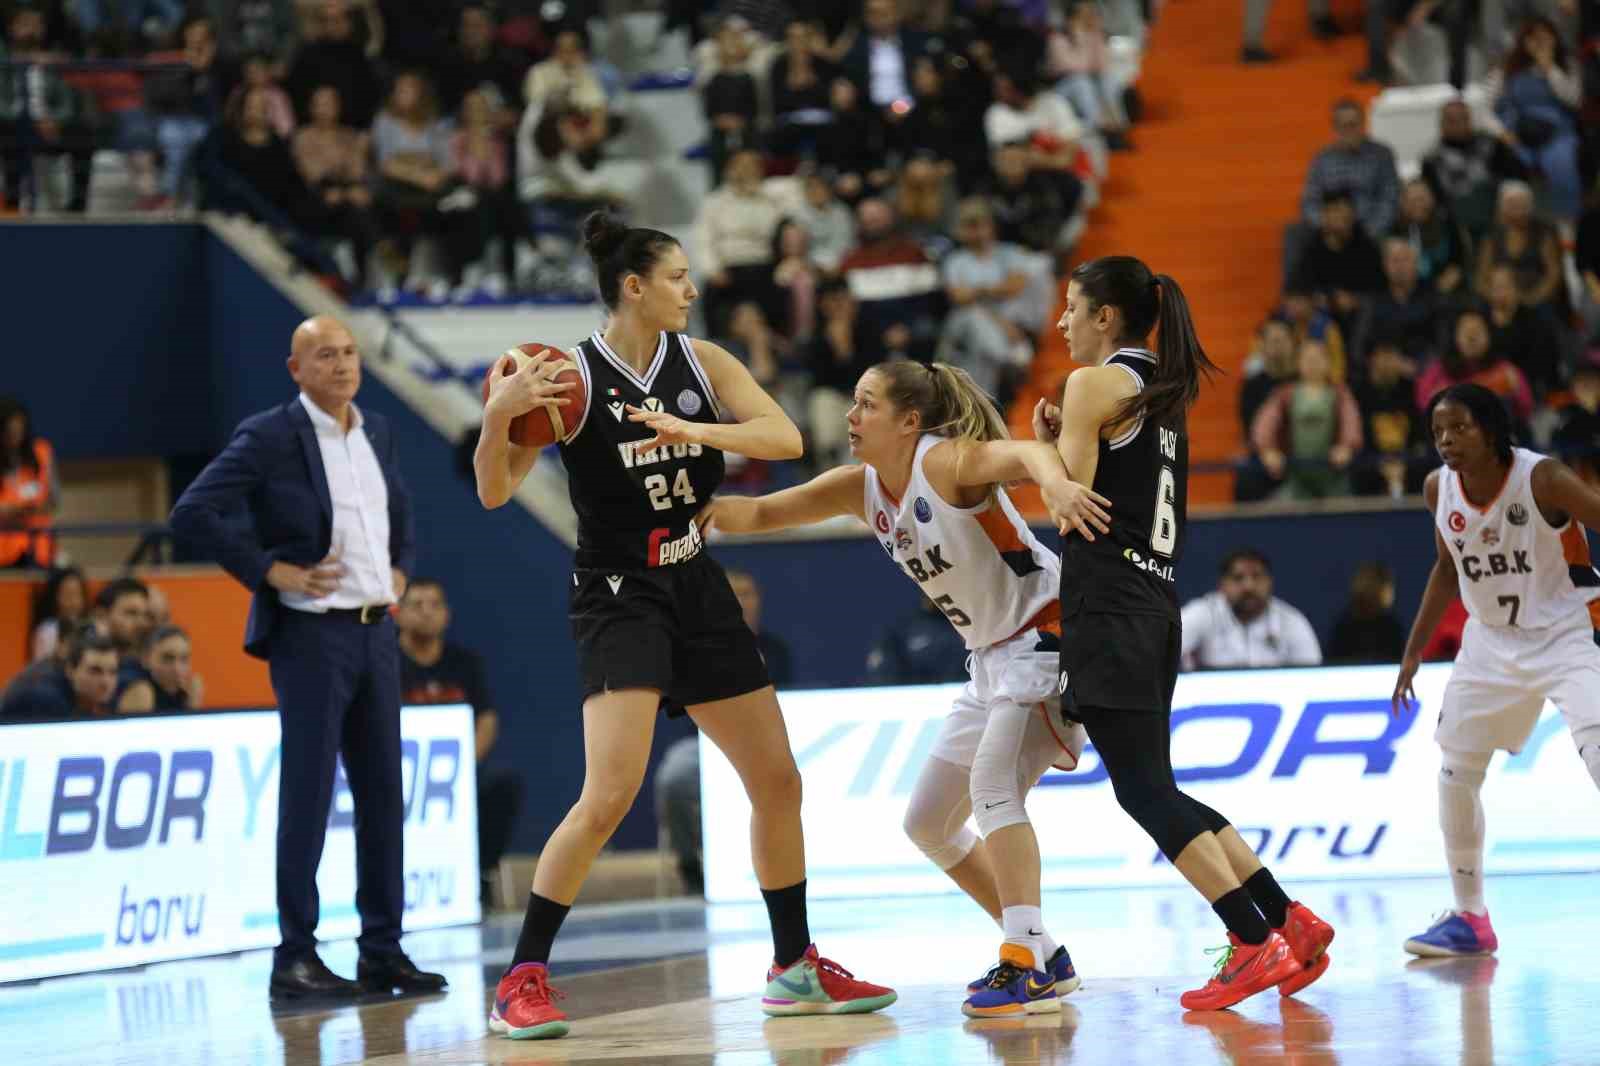 Cukurova Basketbol Meskeninde Kazandi 1 Ypcbsyxg